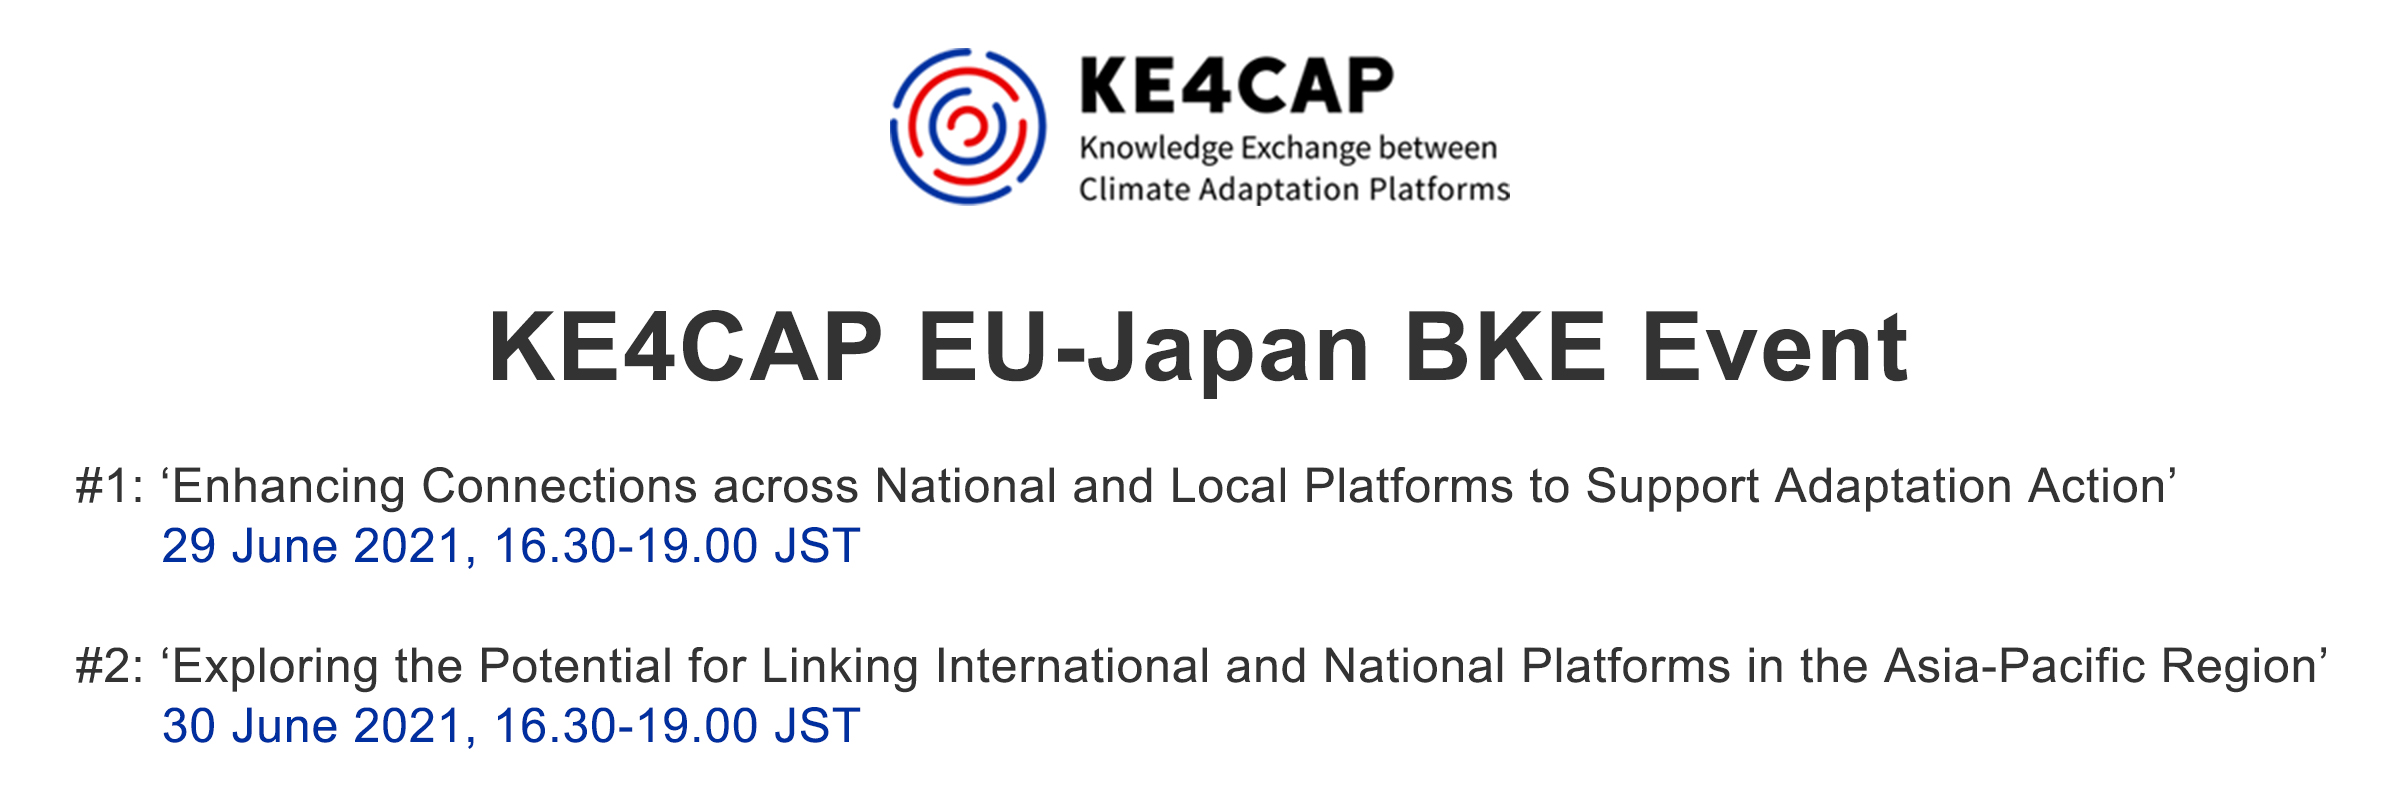 KE4CAP EU-Japan BKE Event